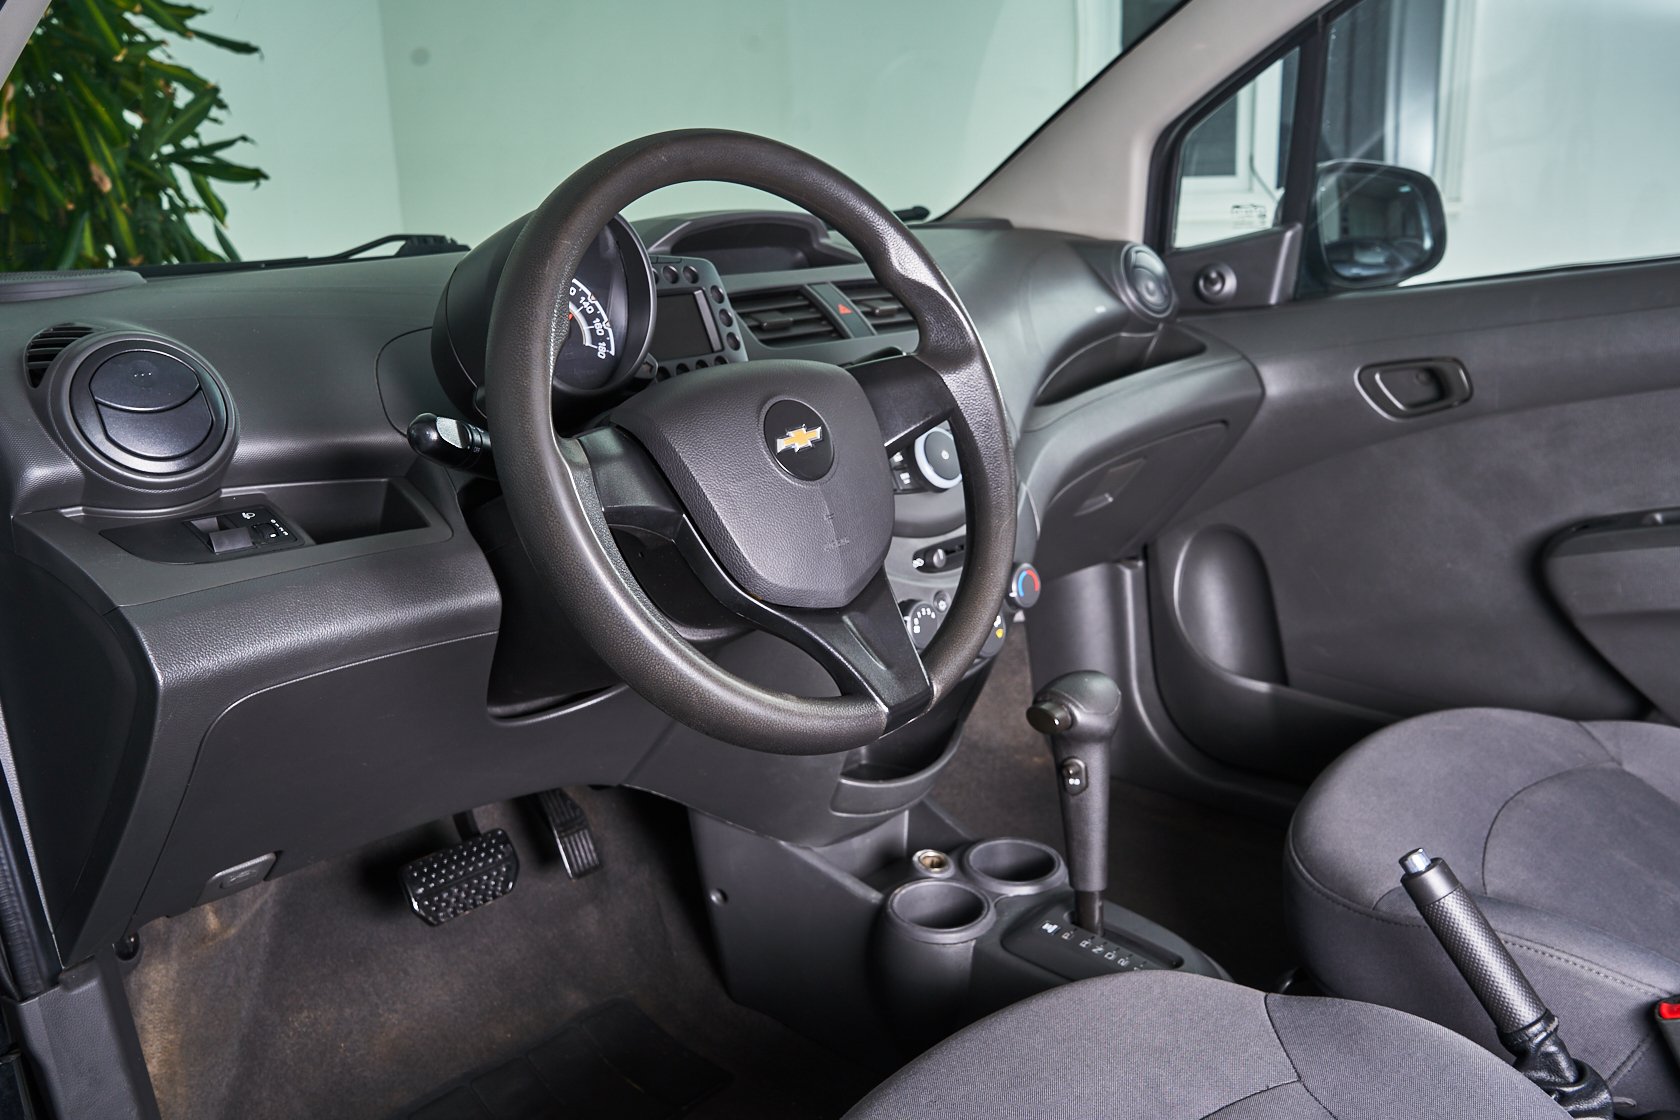 2012 Chevrolet Spark III №5423466, Черный, 309000 рублей - вид 12